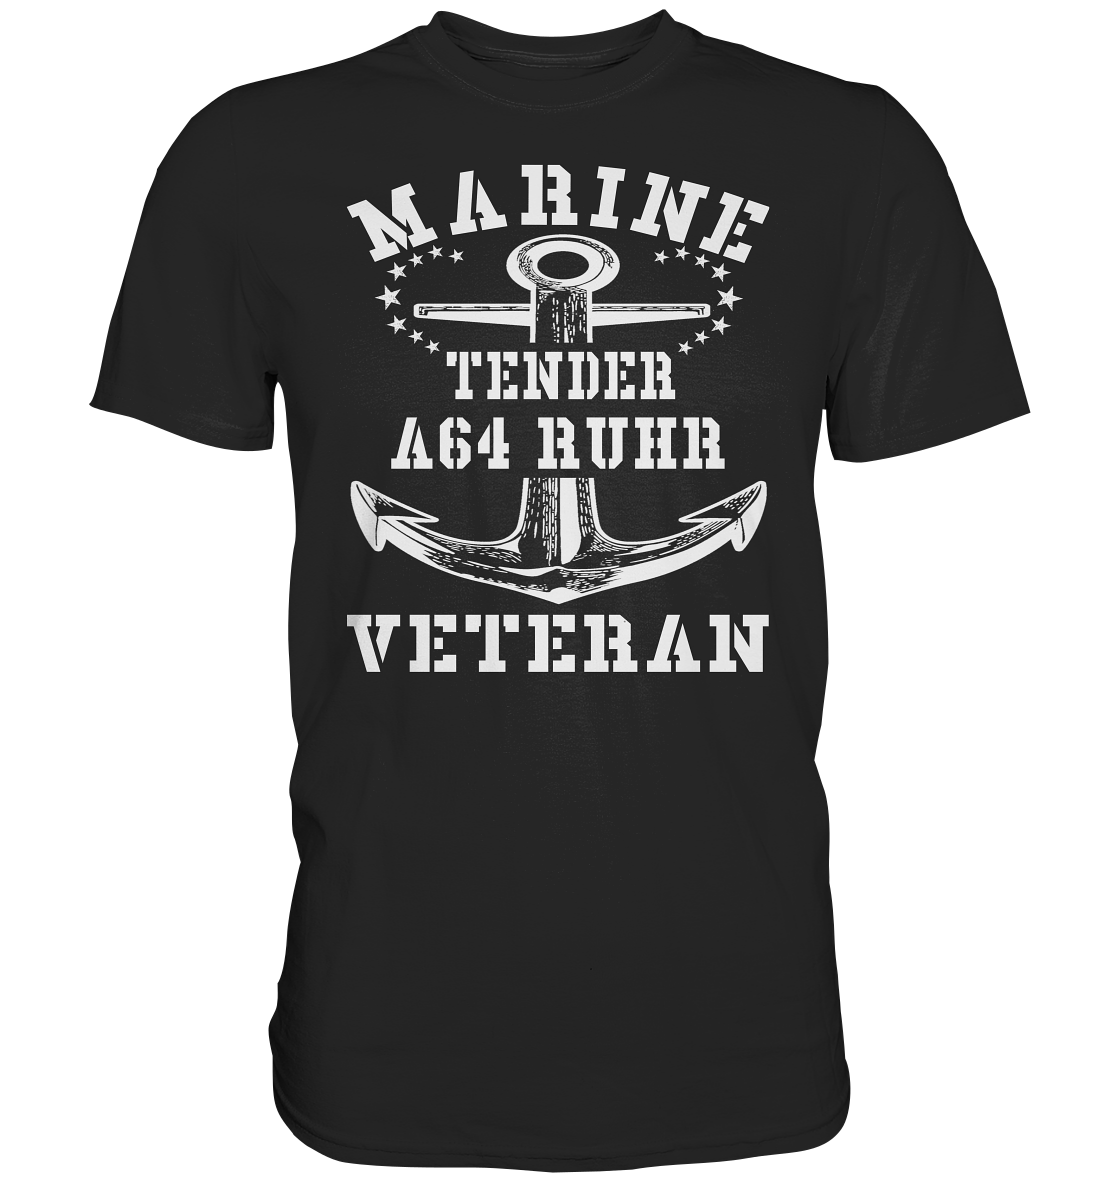 Tender A64 RUHR Marine Veteran - Premium Shirt